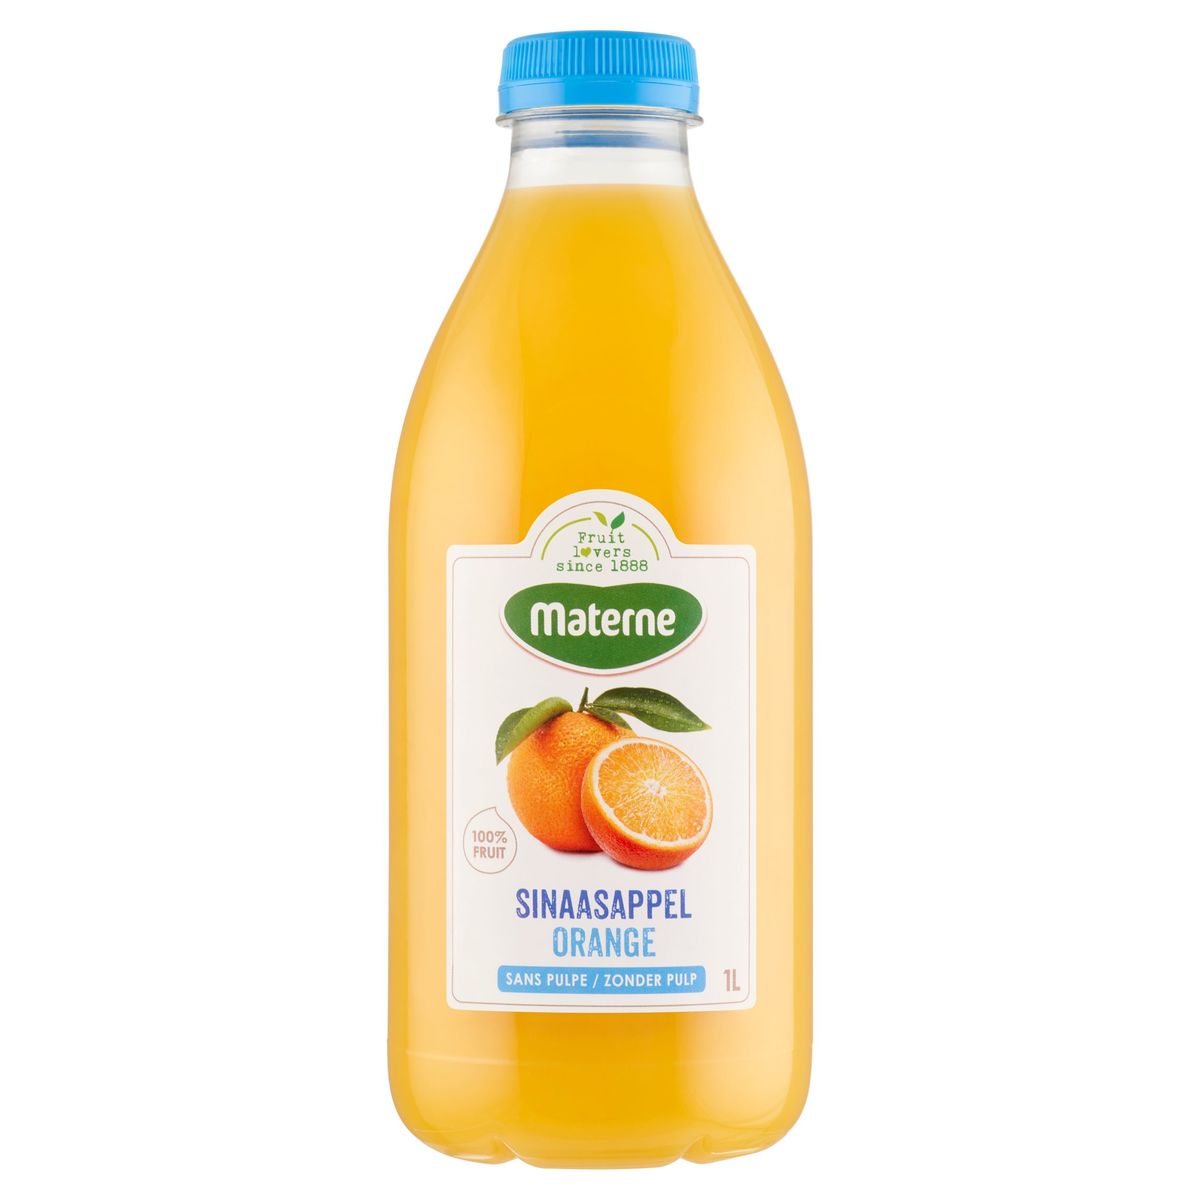 Materne Orange sans Pulpe 1 L